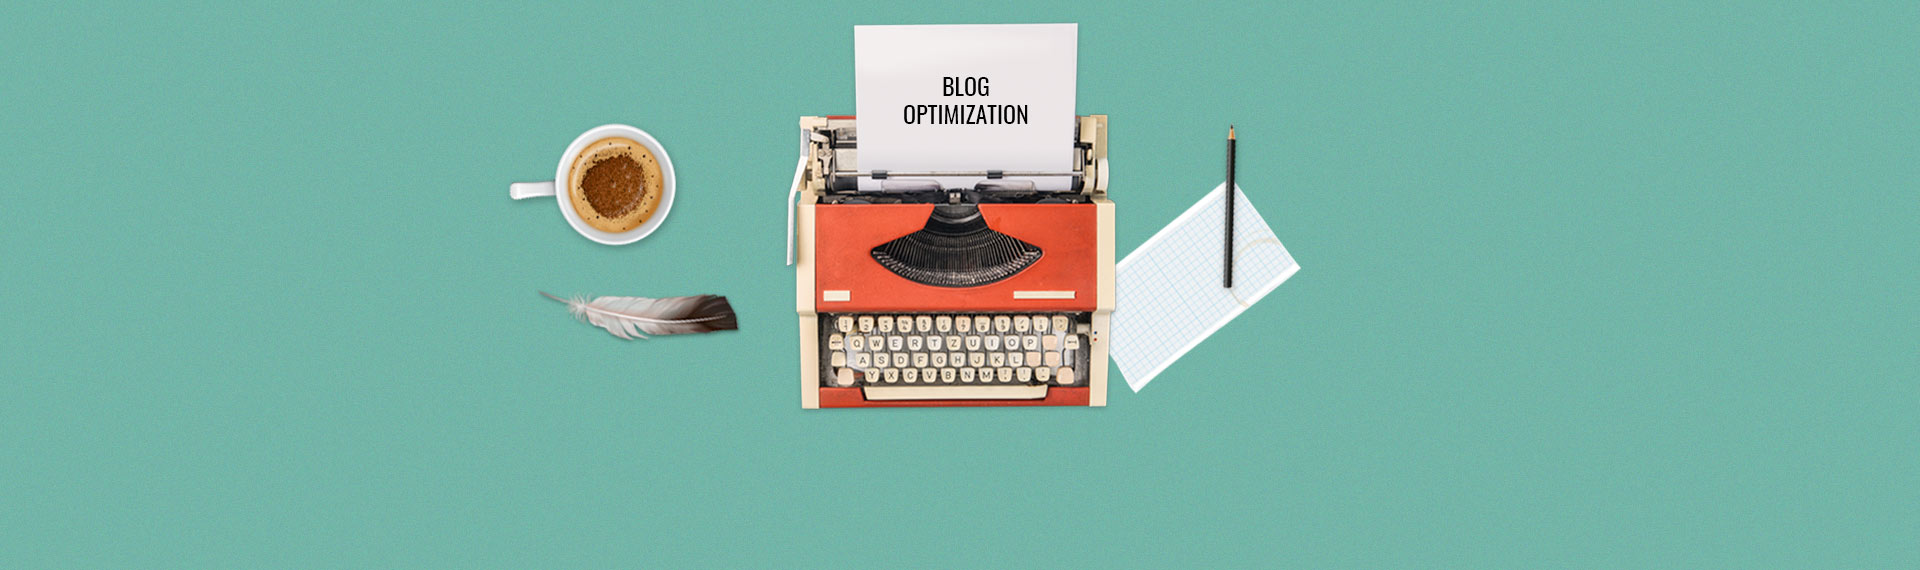 7 Highly Effective SEO Tips For Blog Optimization